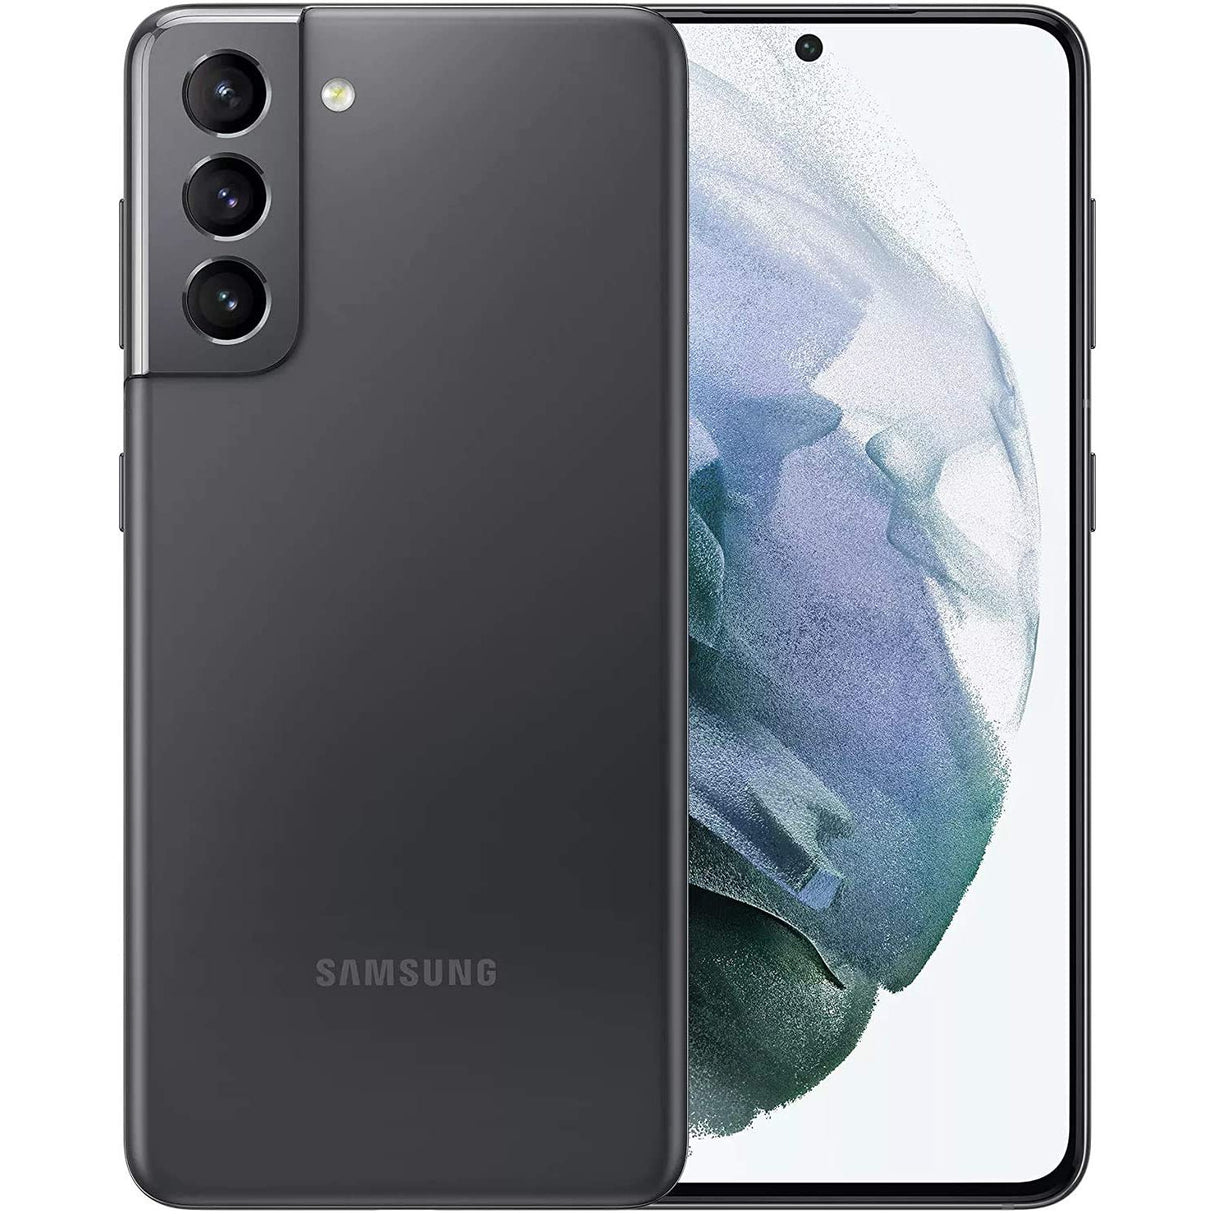 Samsung Galaxy S21 5G - 128 GB - Phantom Gray - T-Mobile - GSM